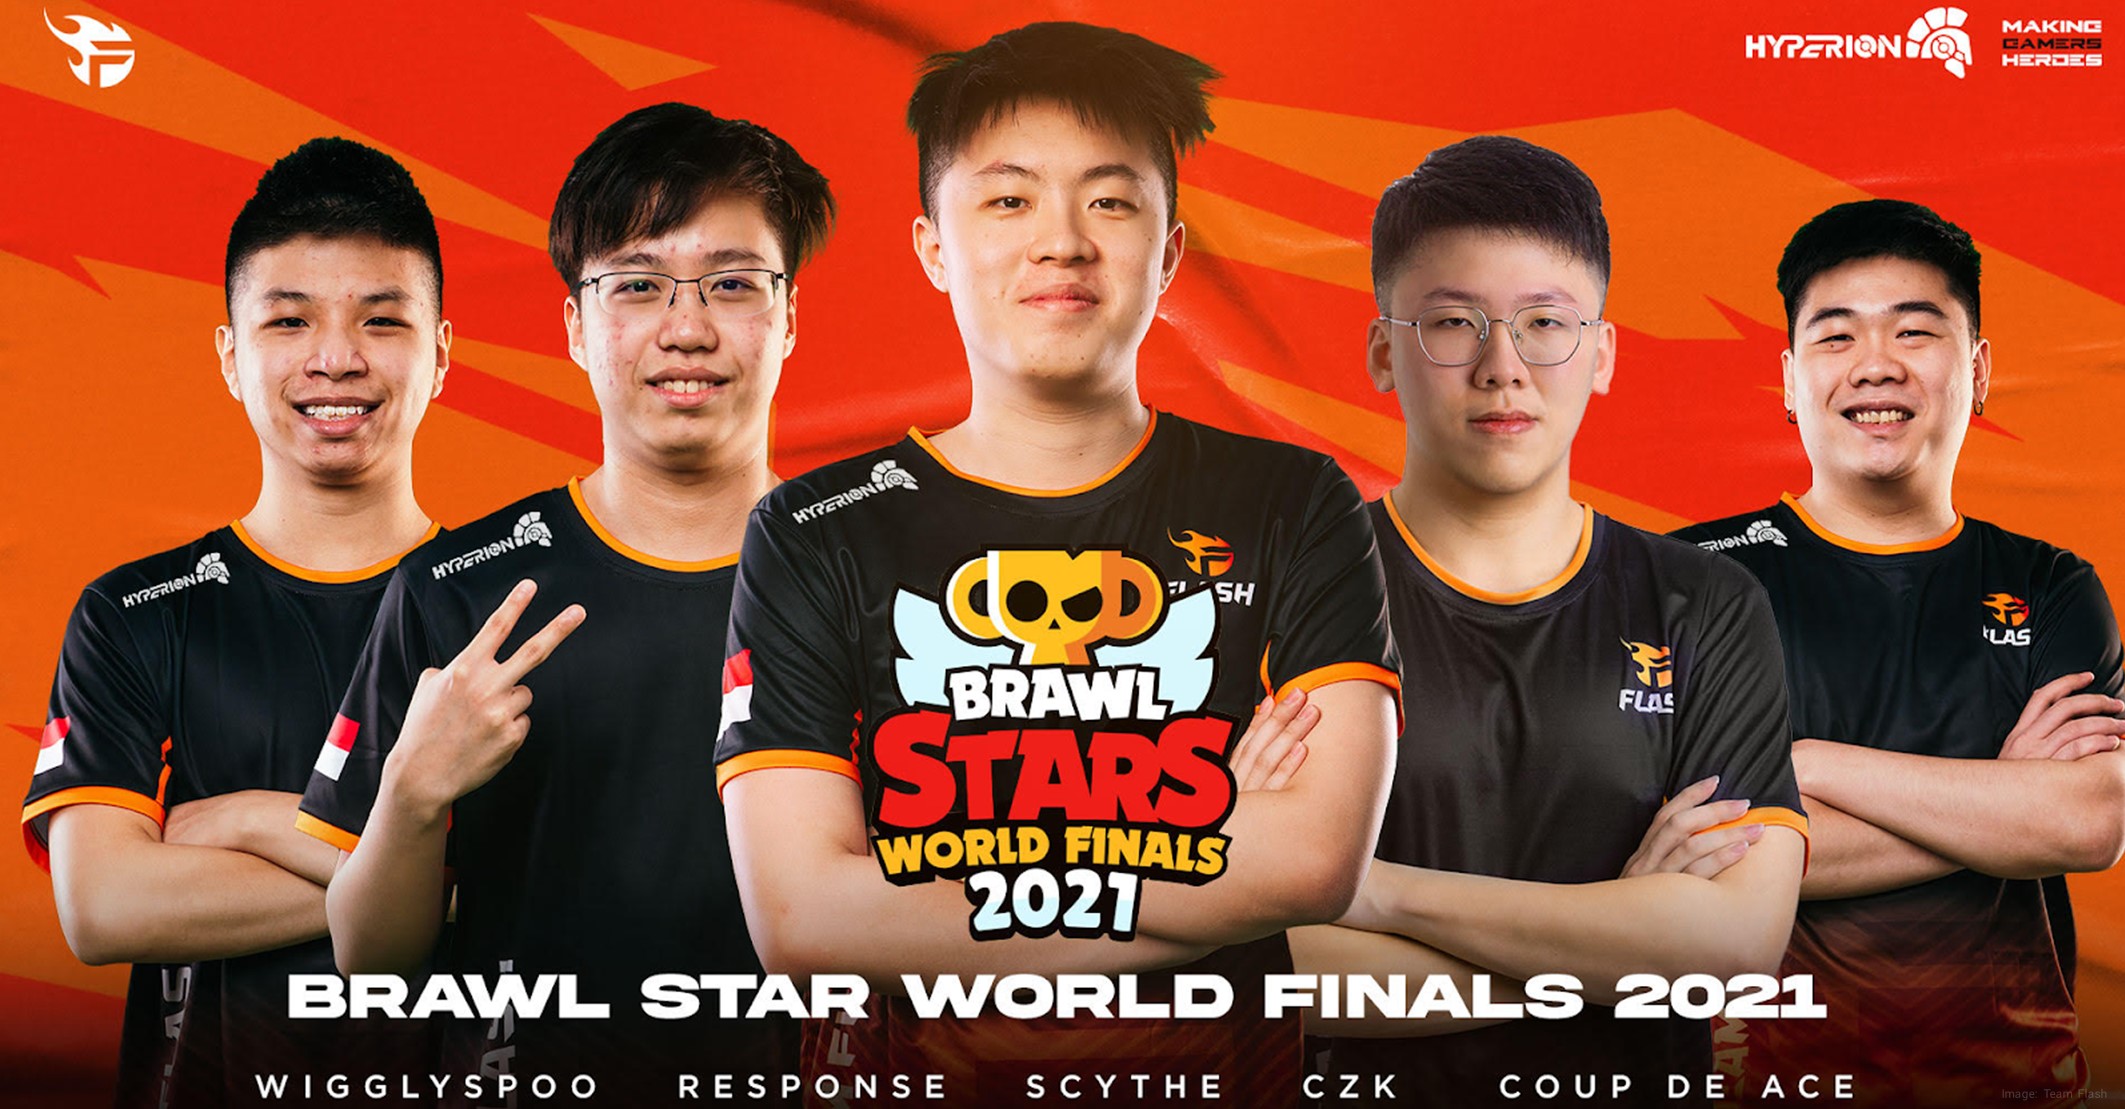 Brawl Stars World Finals 2023 - Teams, Prize Pool & Schedule